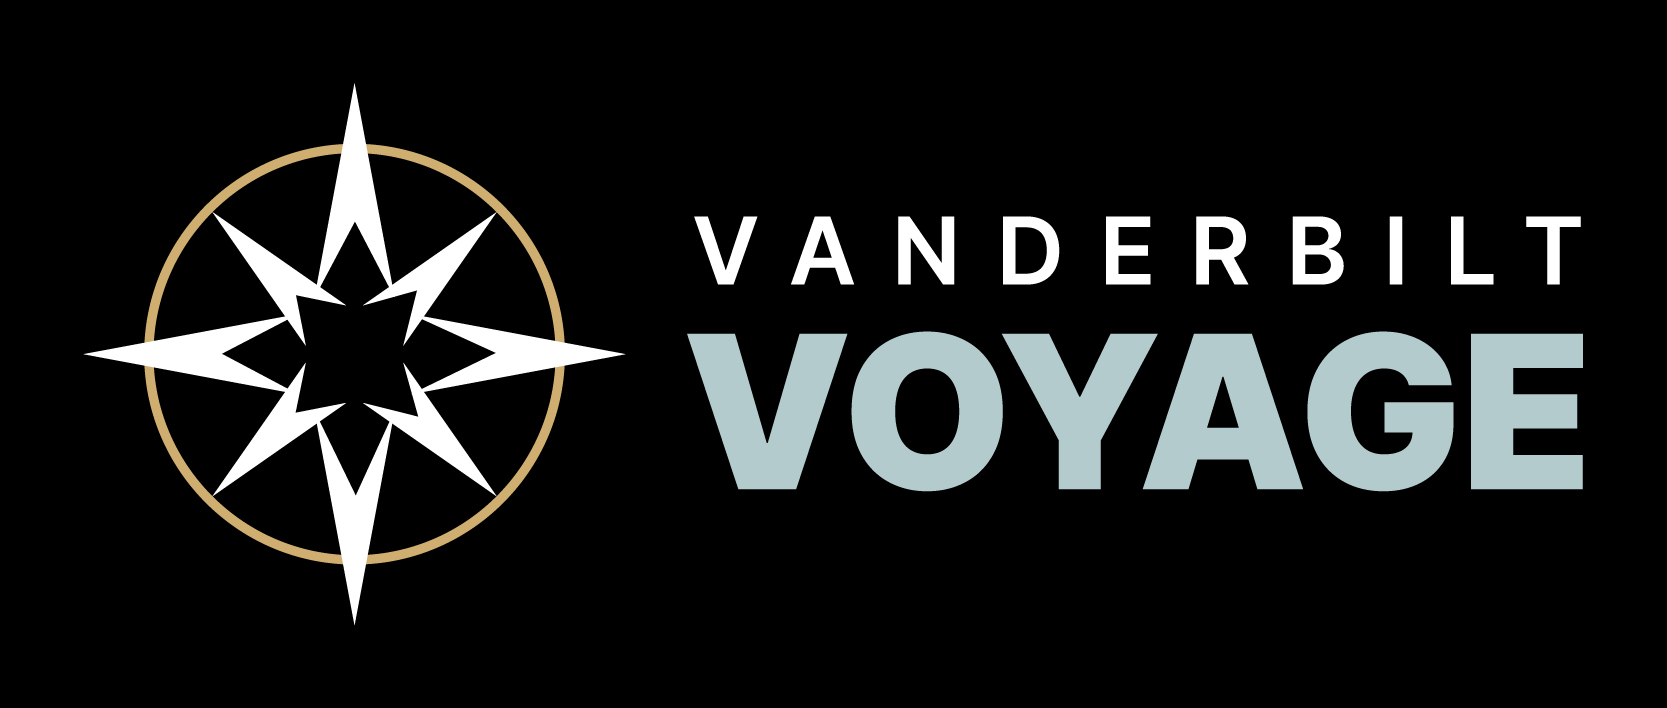 People, Culture and Belonging unveils a reimagined onboarding experience: Vanderbilt Voyage